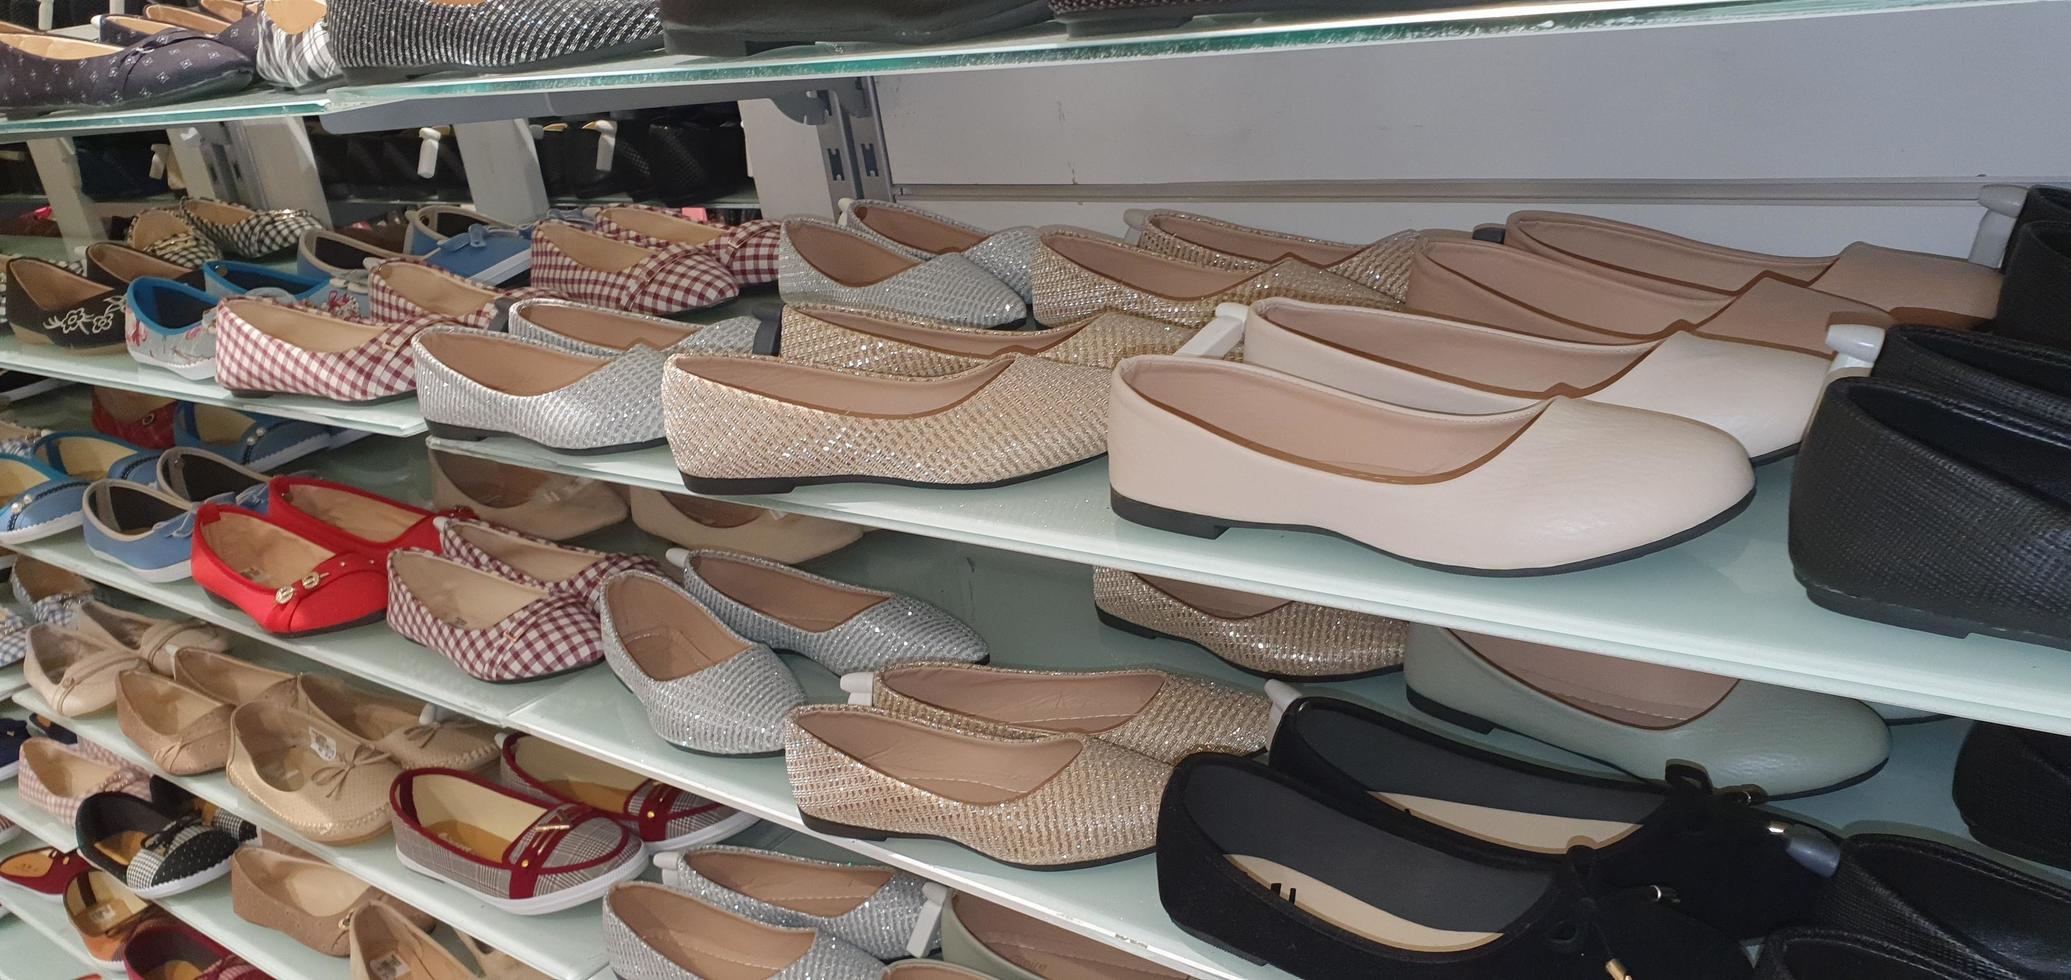 women fashion shoes in the retail clothing shop display shelf. photo